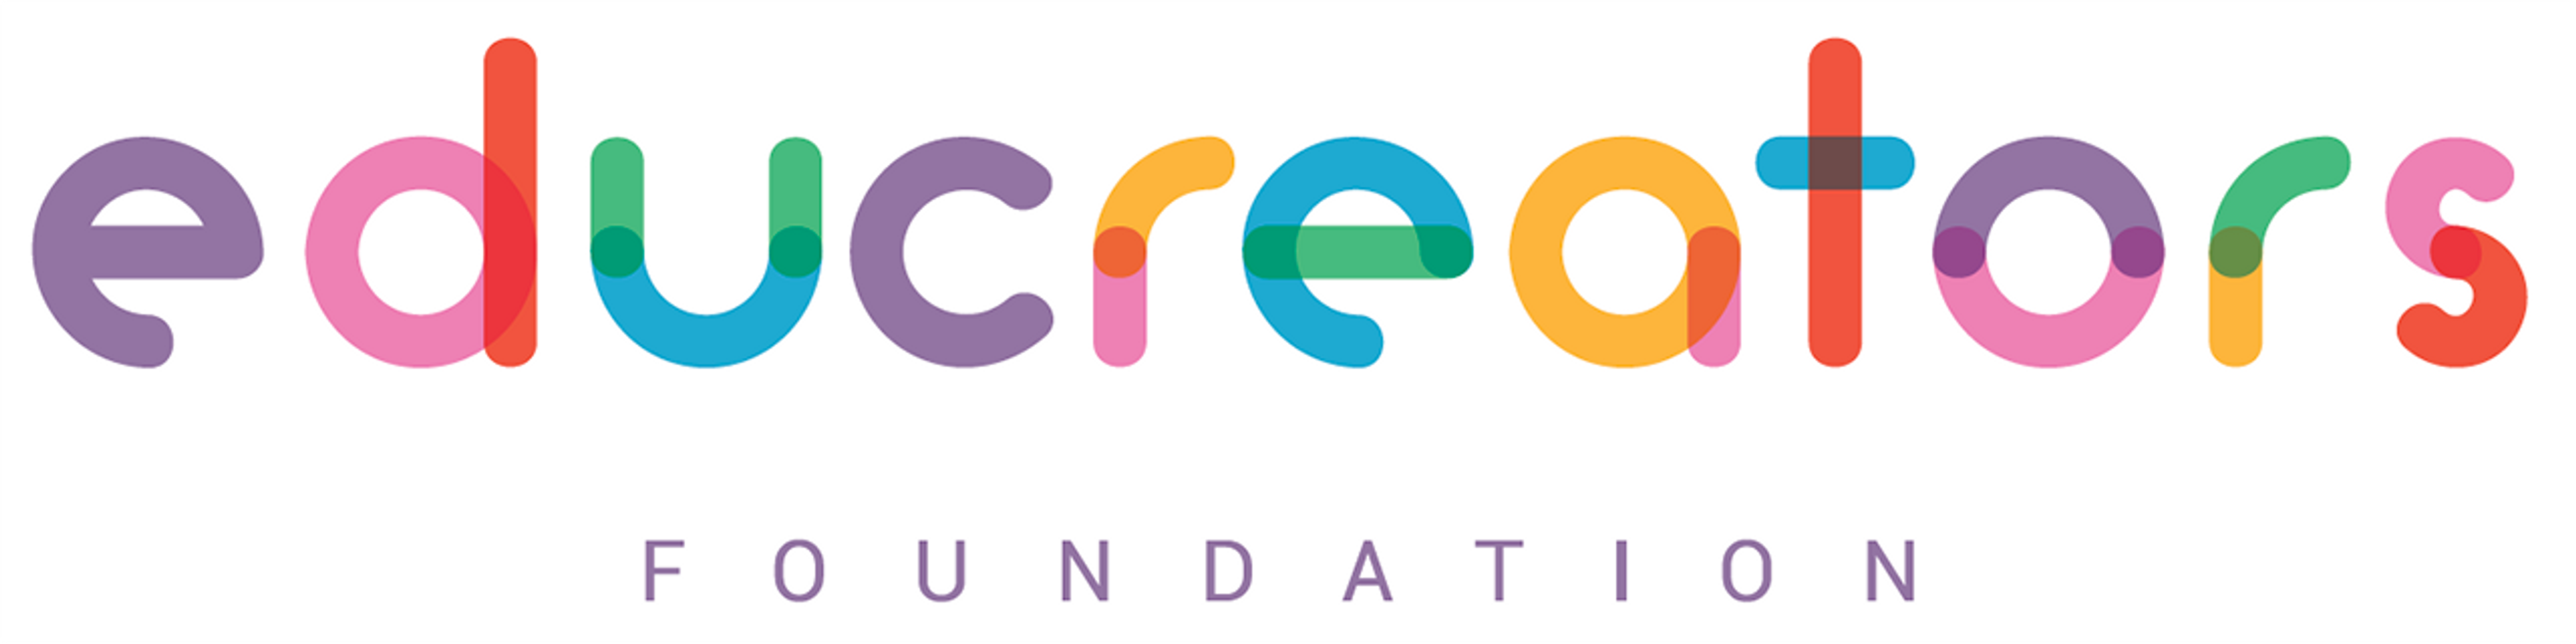 Educreators Foundation logo